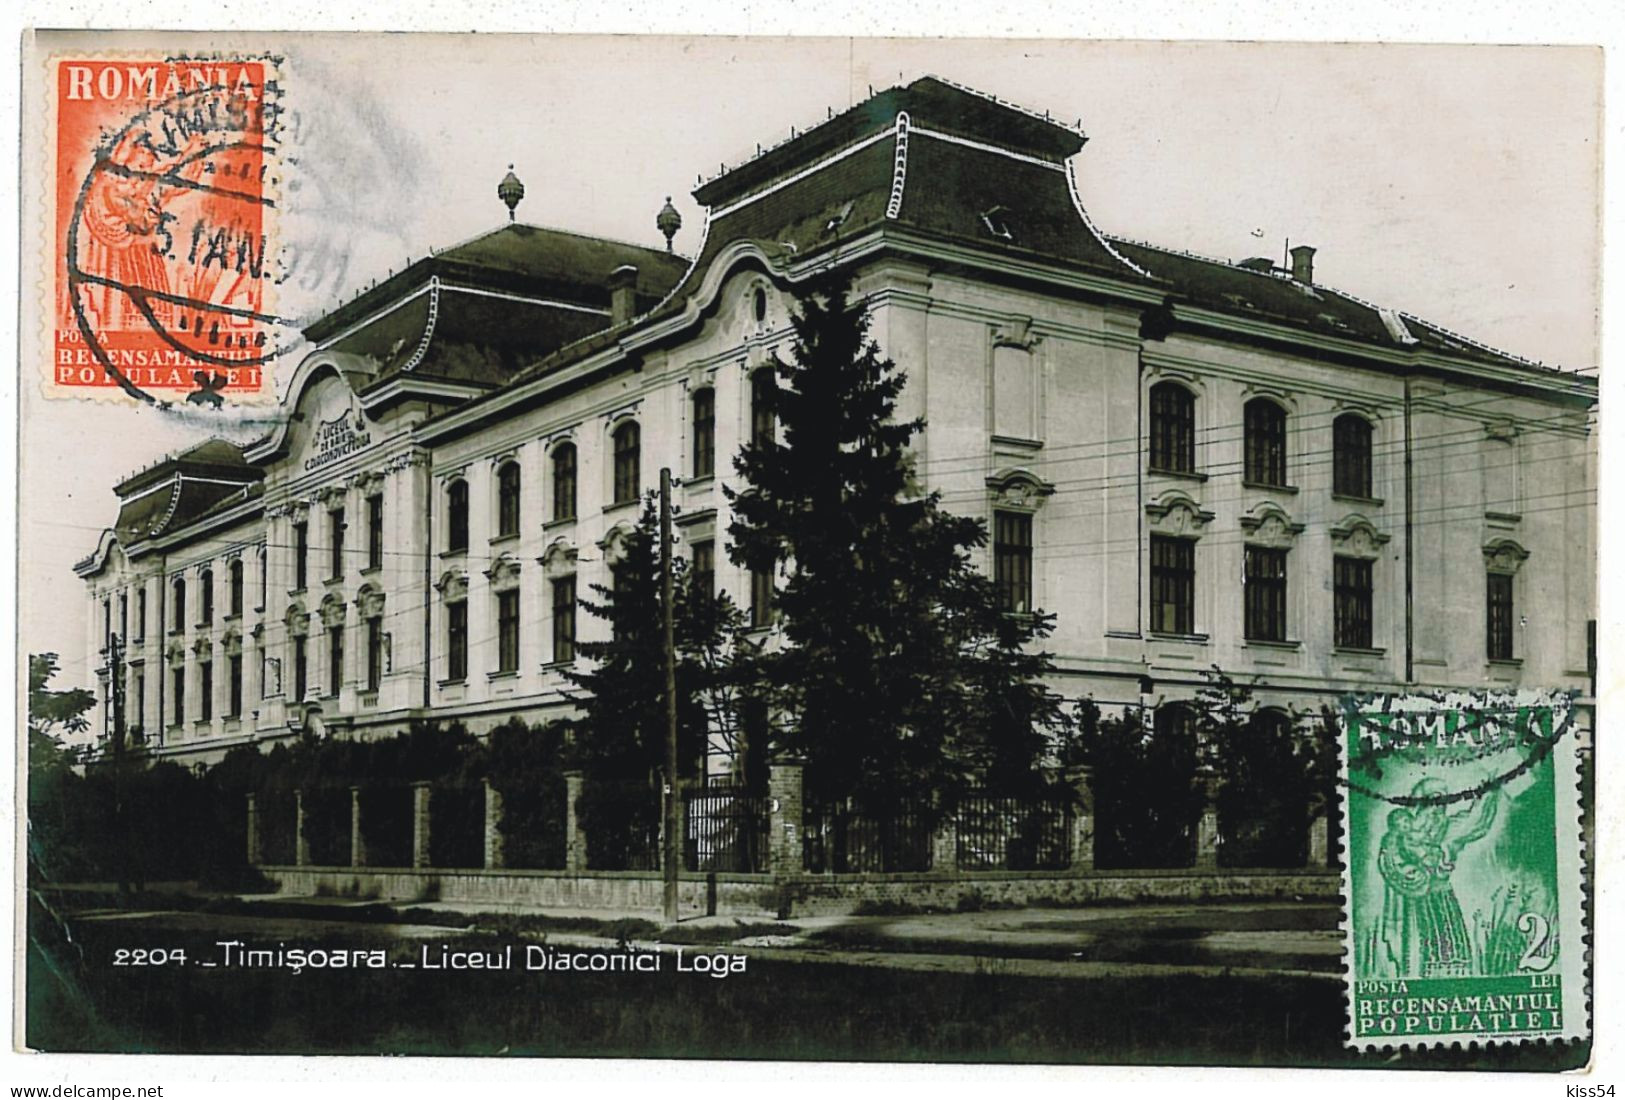 RO 47 - 5495 TIMISOARA, High School LOGA, Romania - Old Postcard, Real Photo - Used - 1931 - TCV - Romania